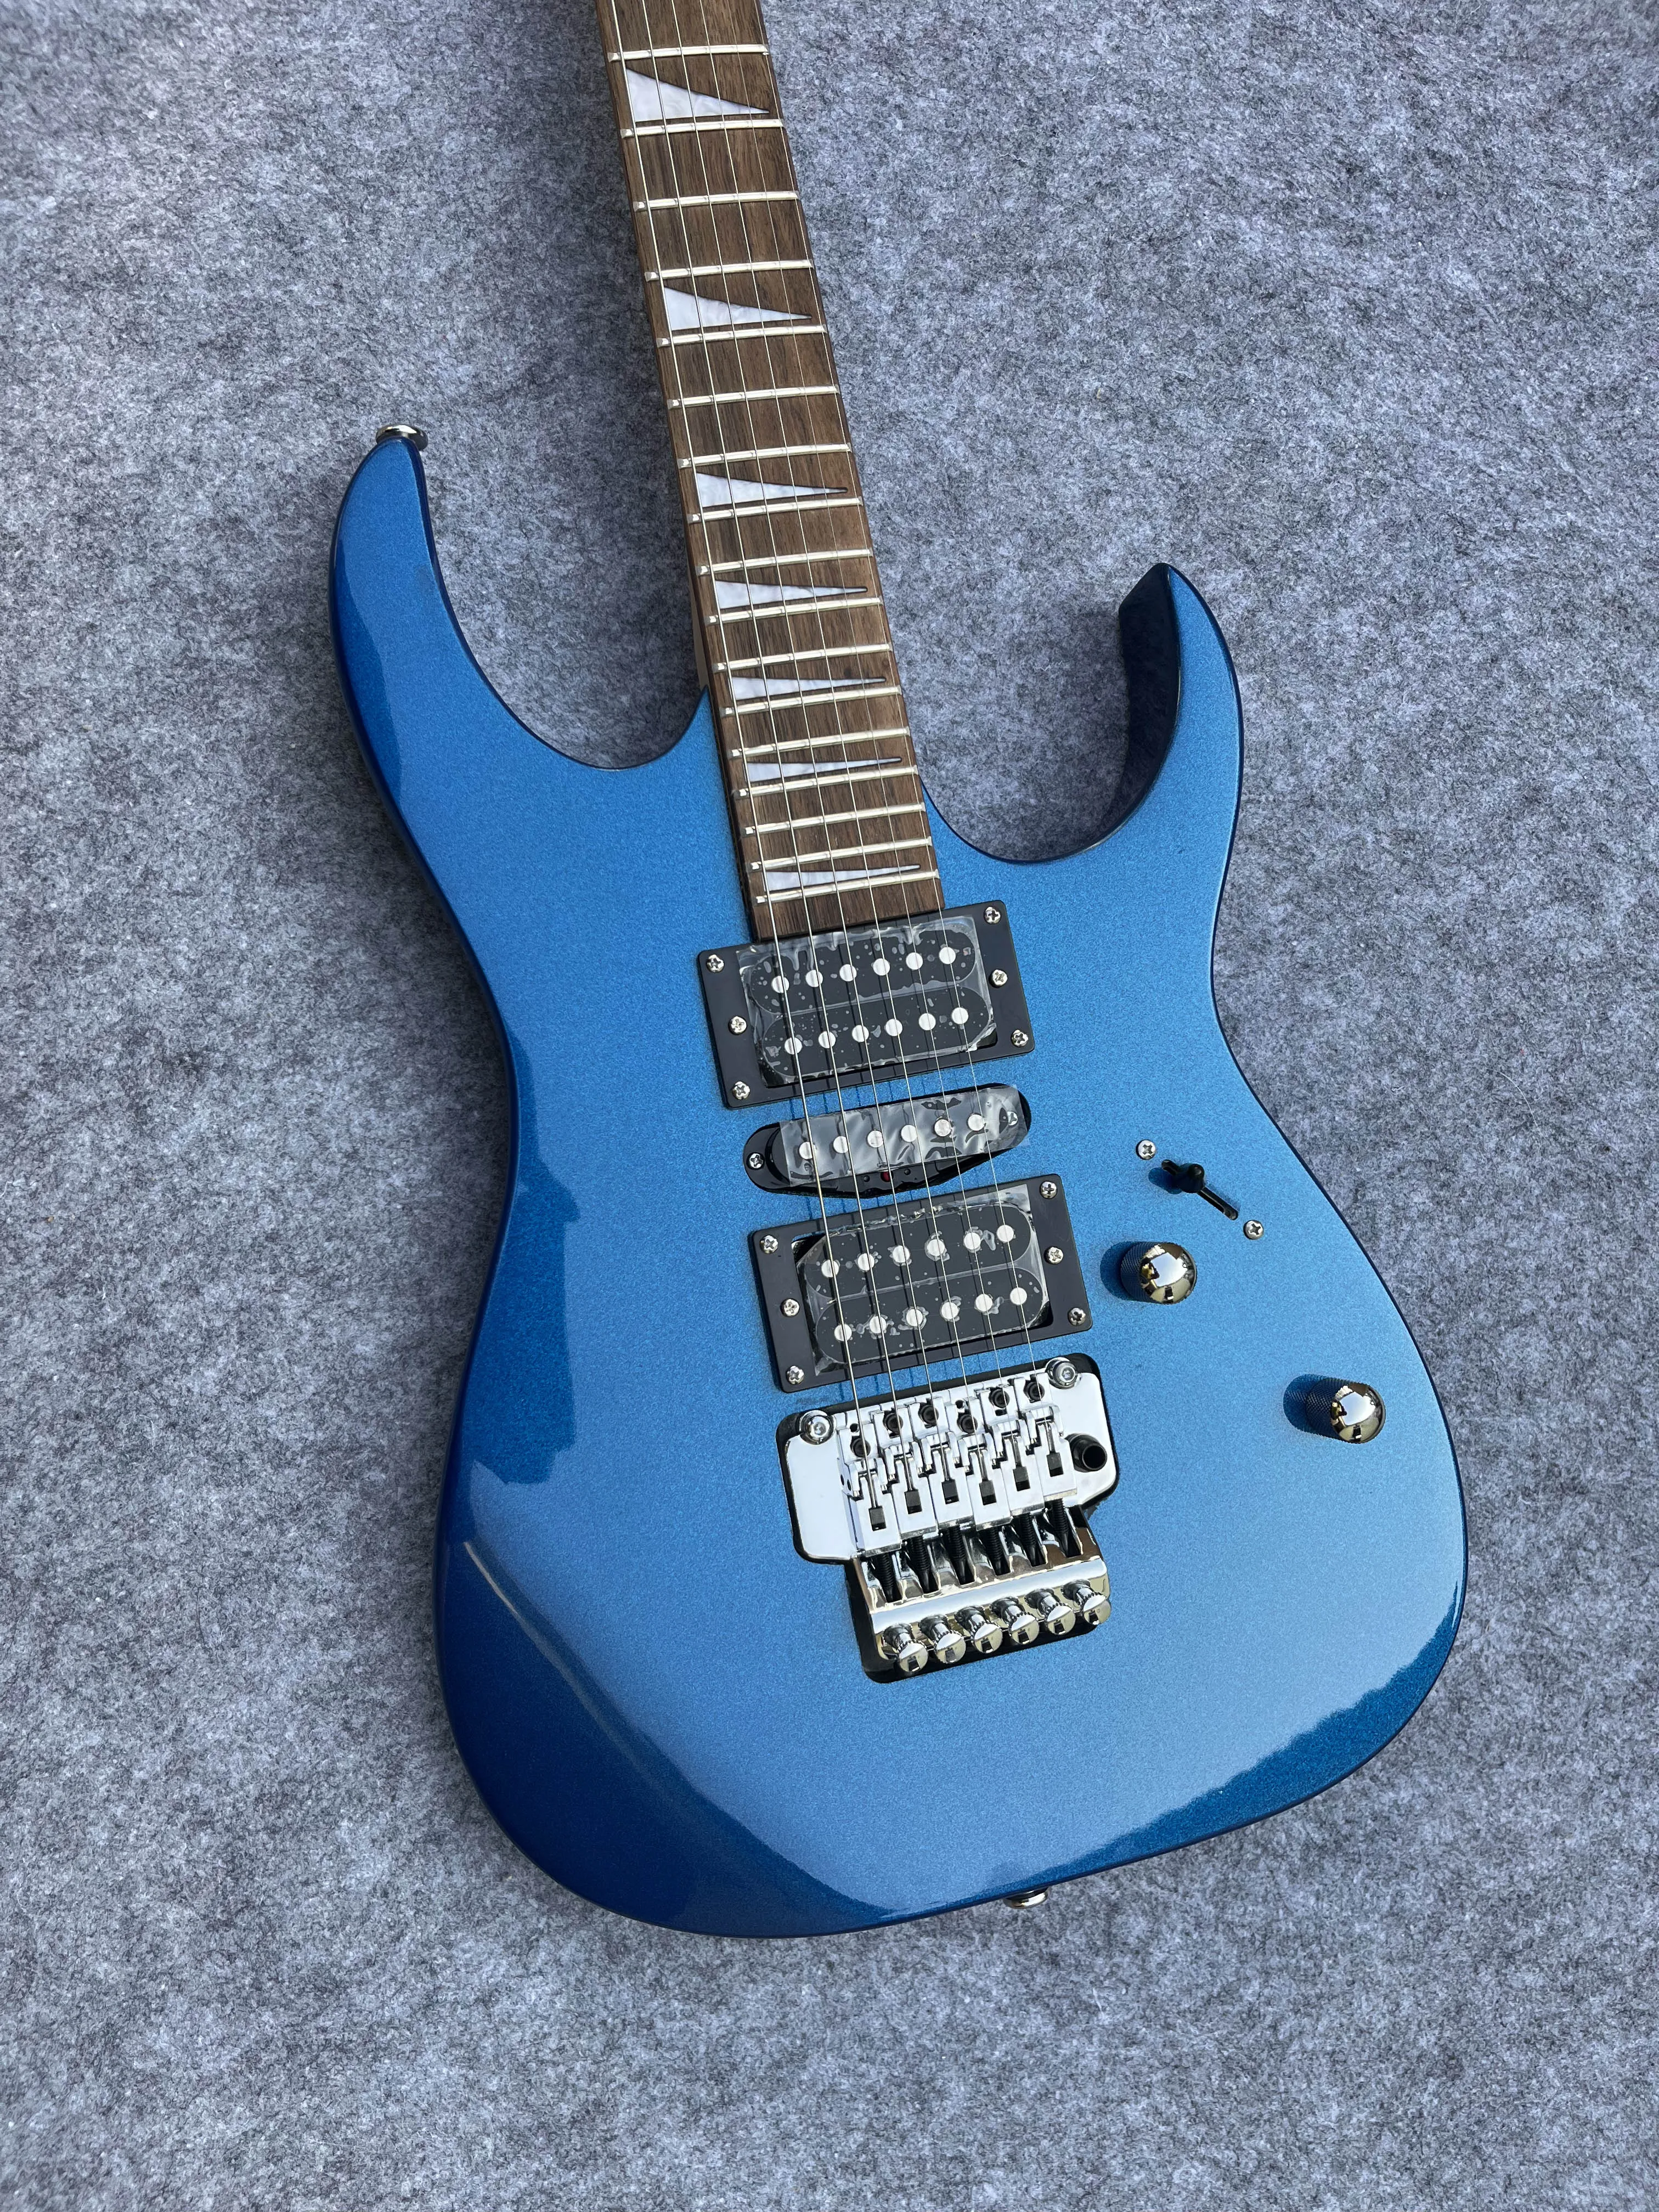 

Newest Custom Handmade Beautiful 6 String Rosewood Fingerboard Mental Blue Floyd Rose Electric Guitar 24 Frets Guitar Only One